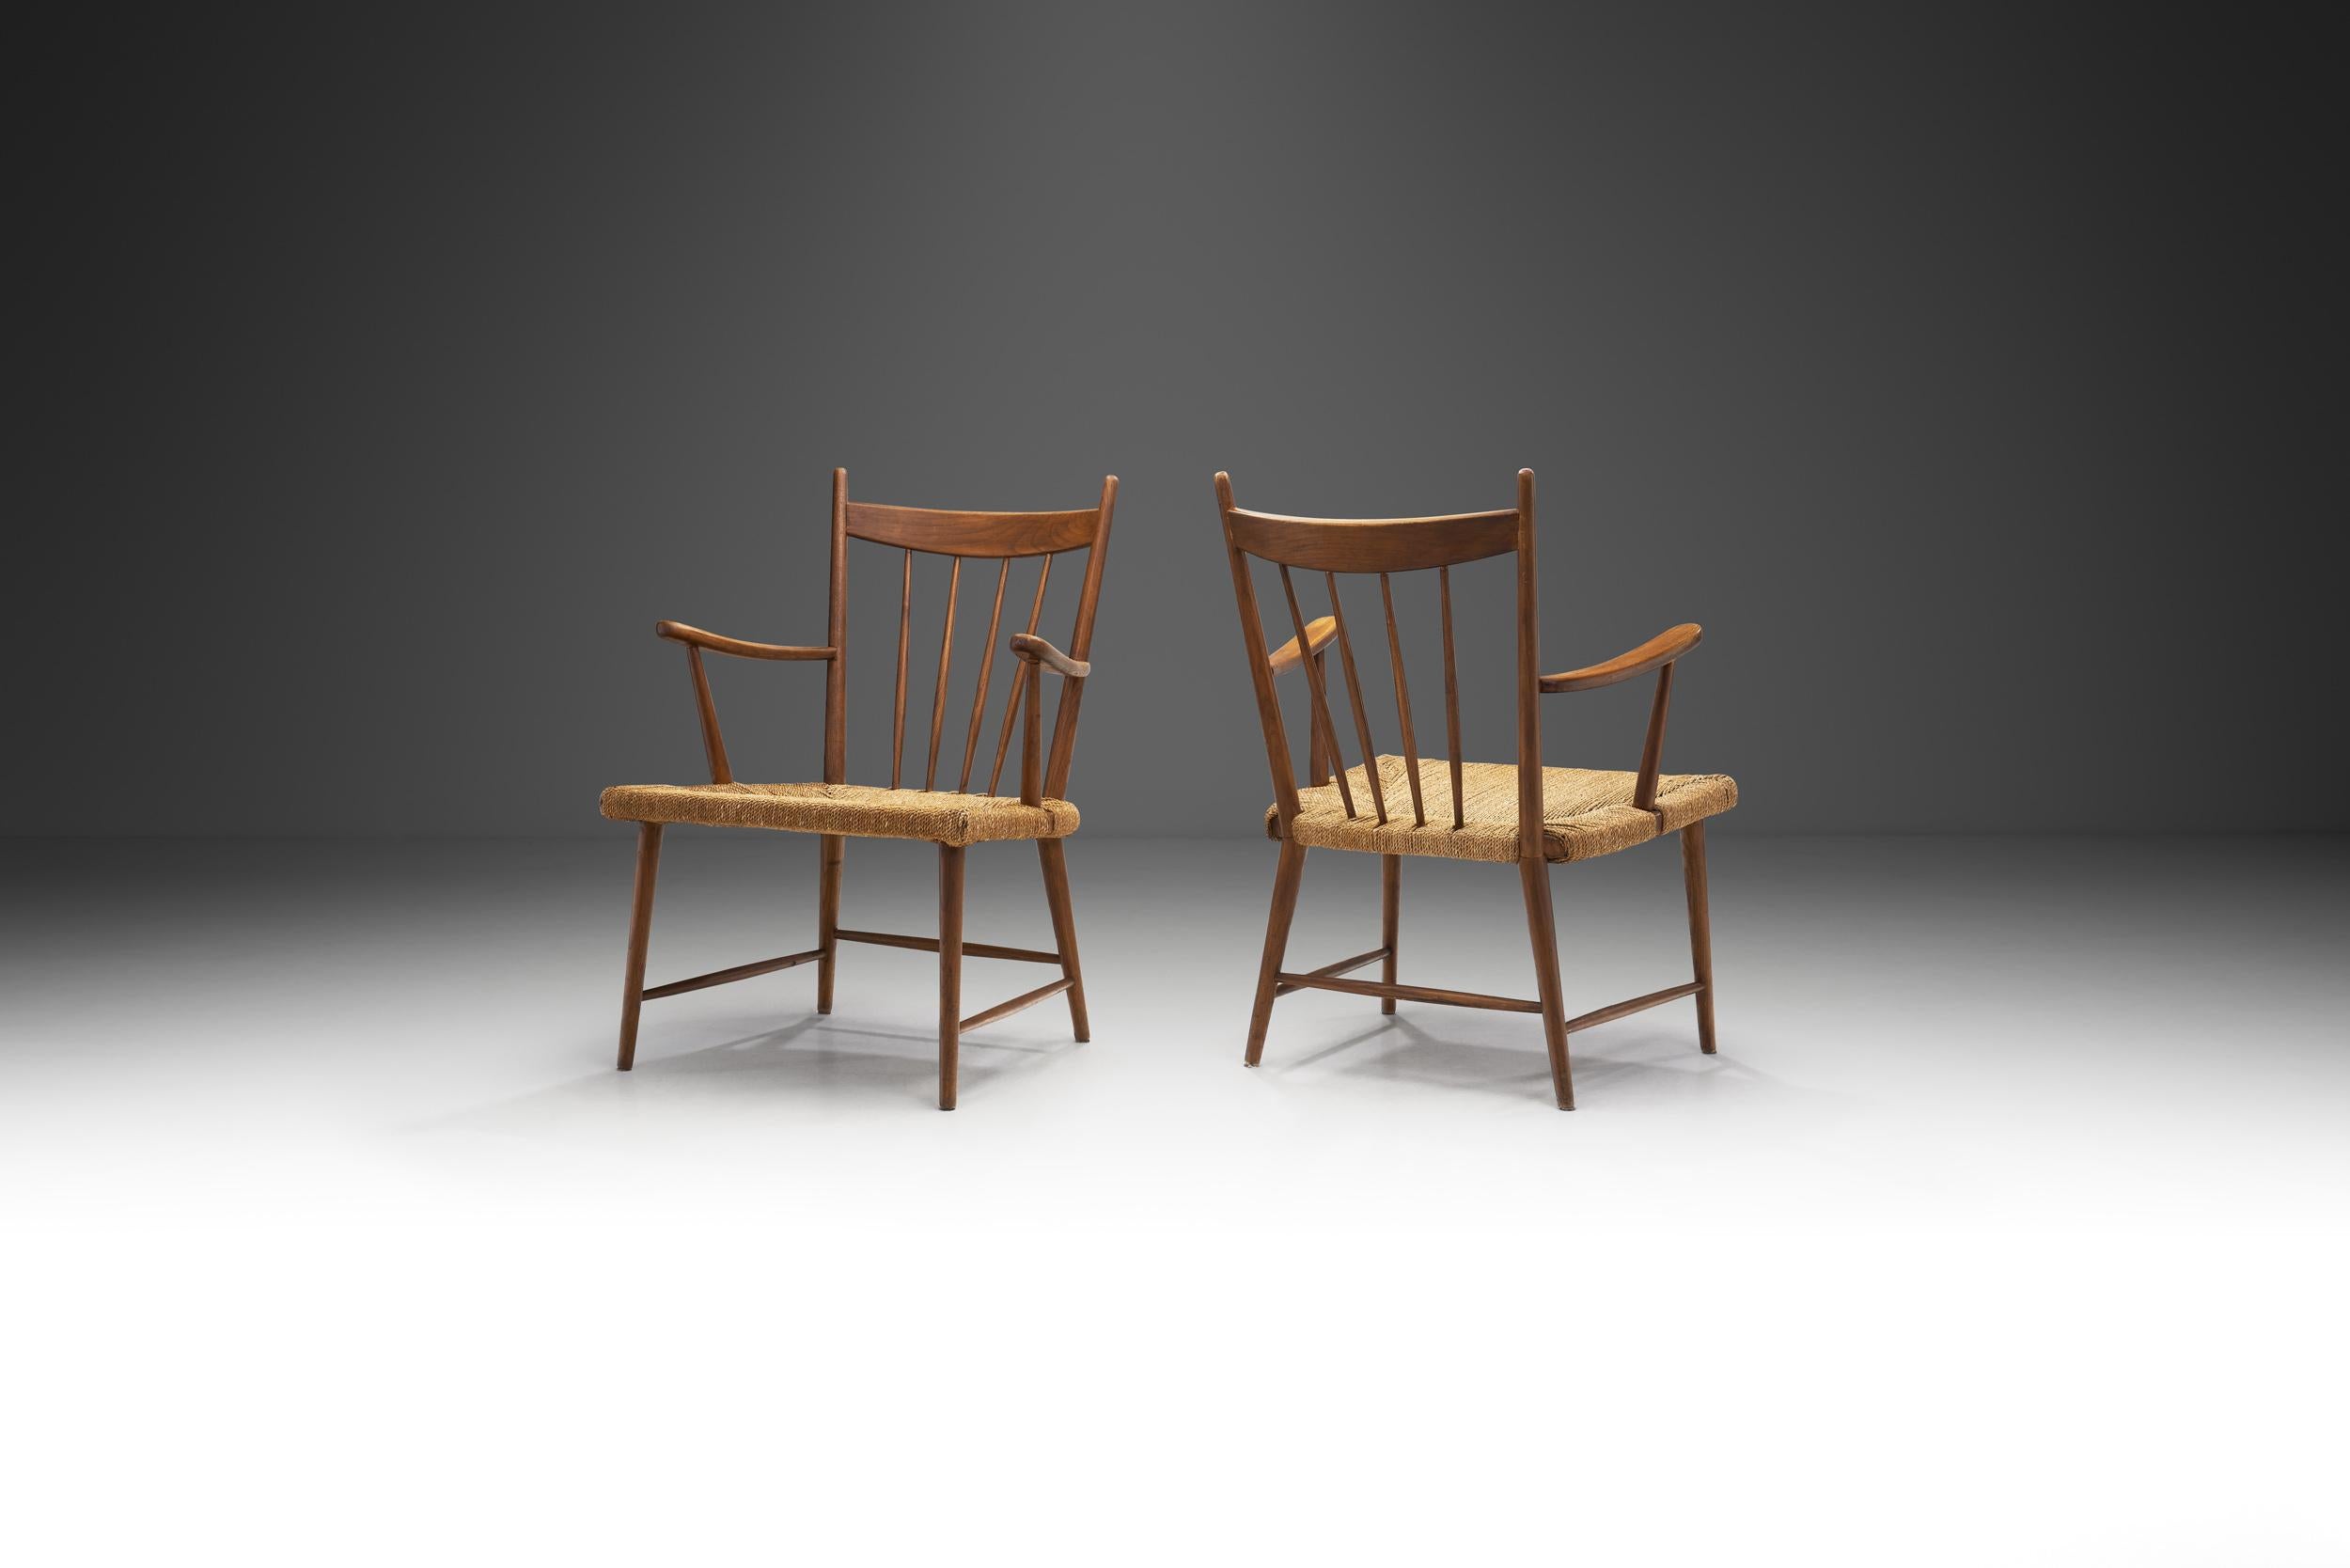 Mid-20th Century Teak Slatback Chairs with Woven Danish Cord Seats, Denmark ca 1960s For Sale